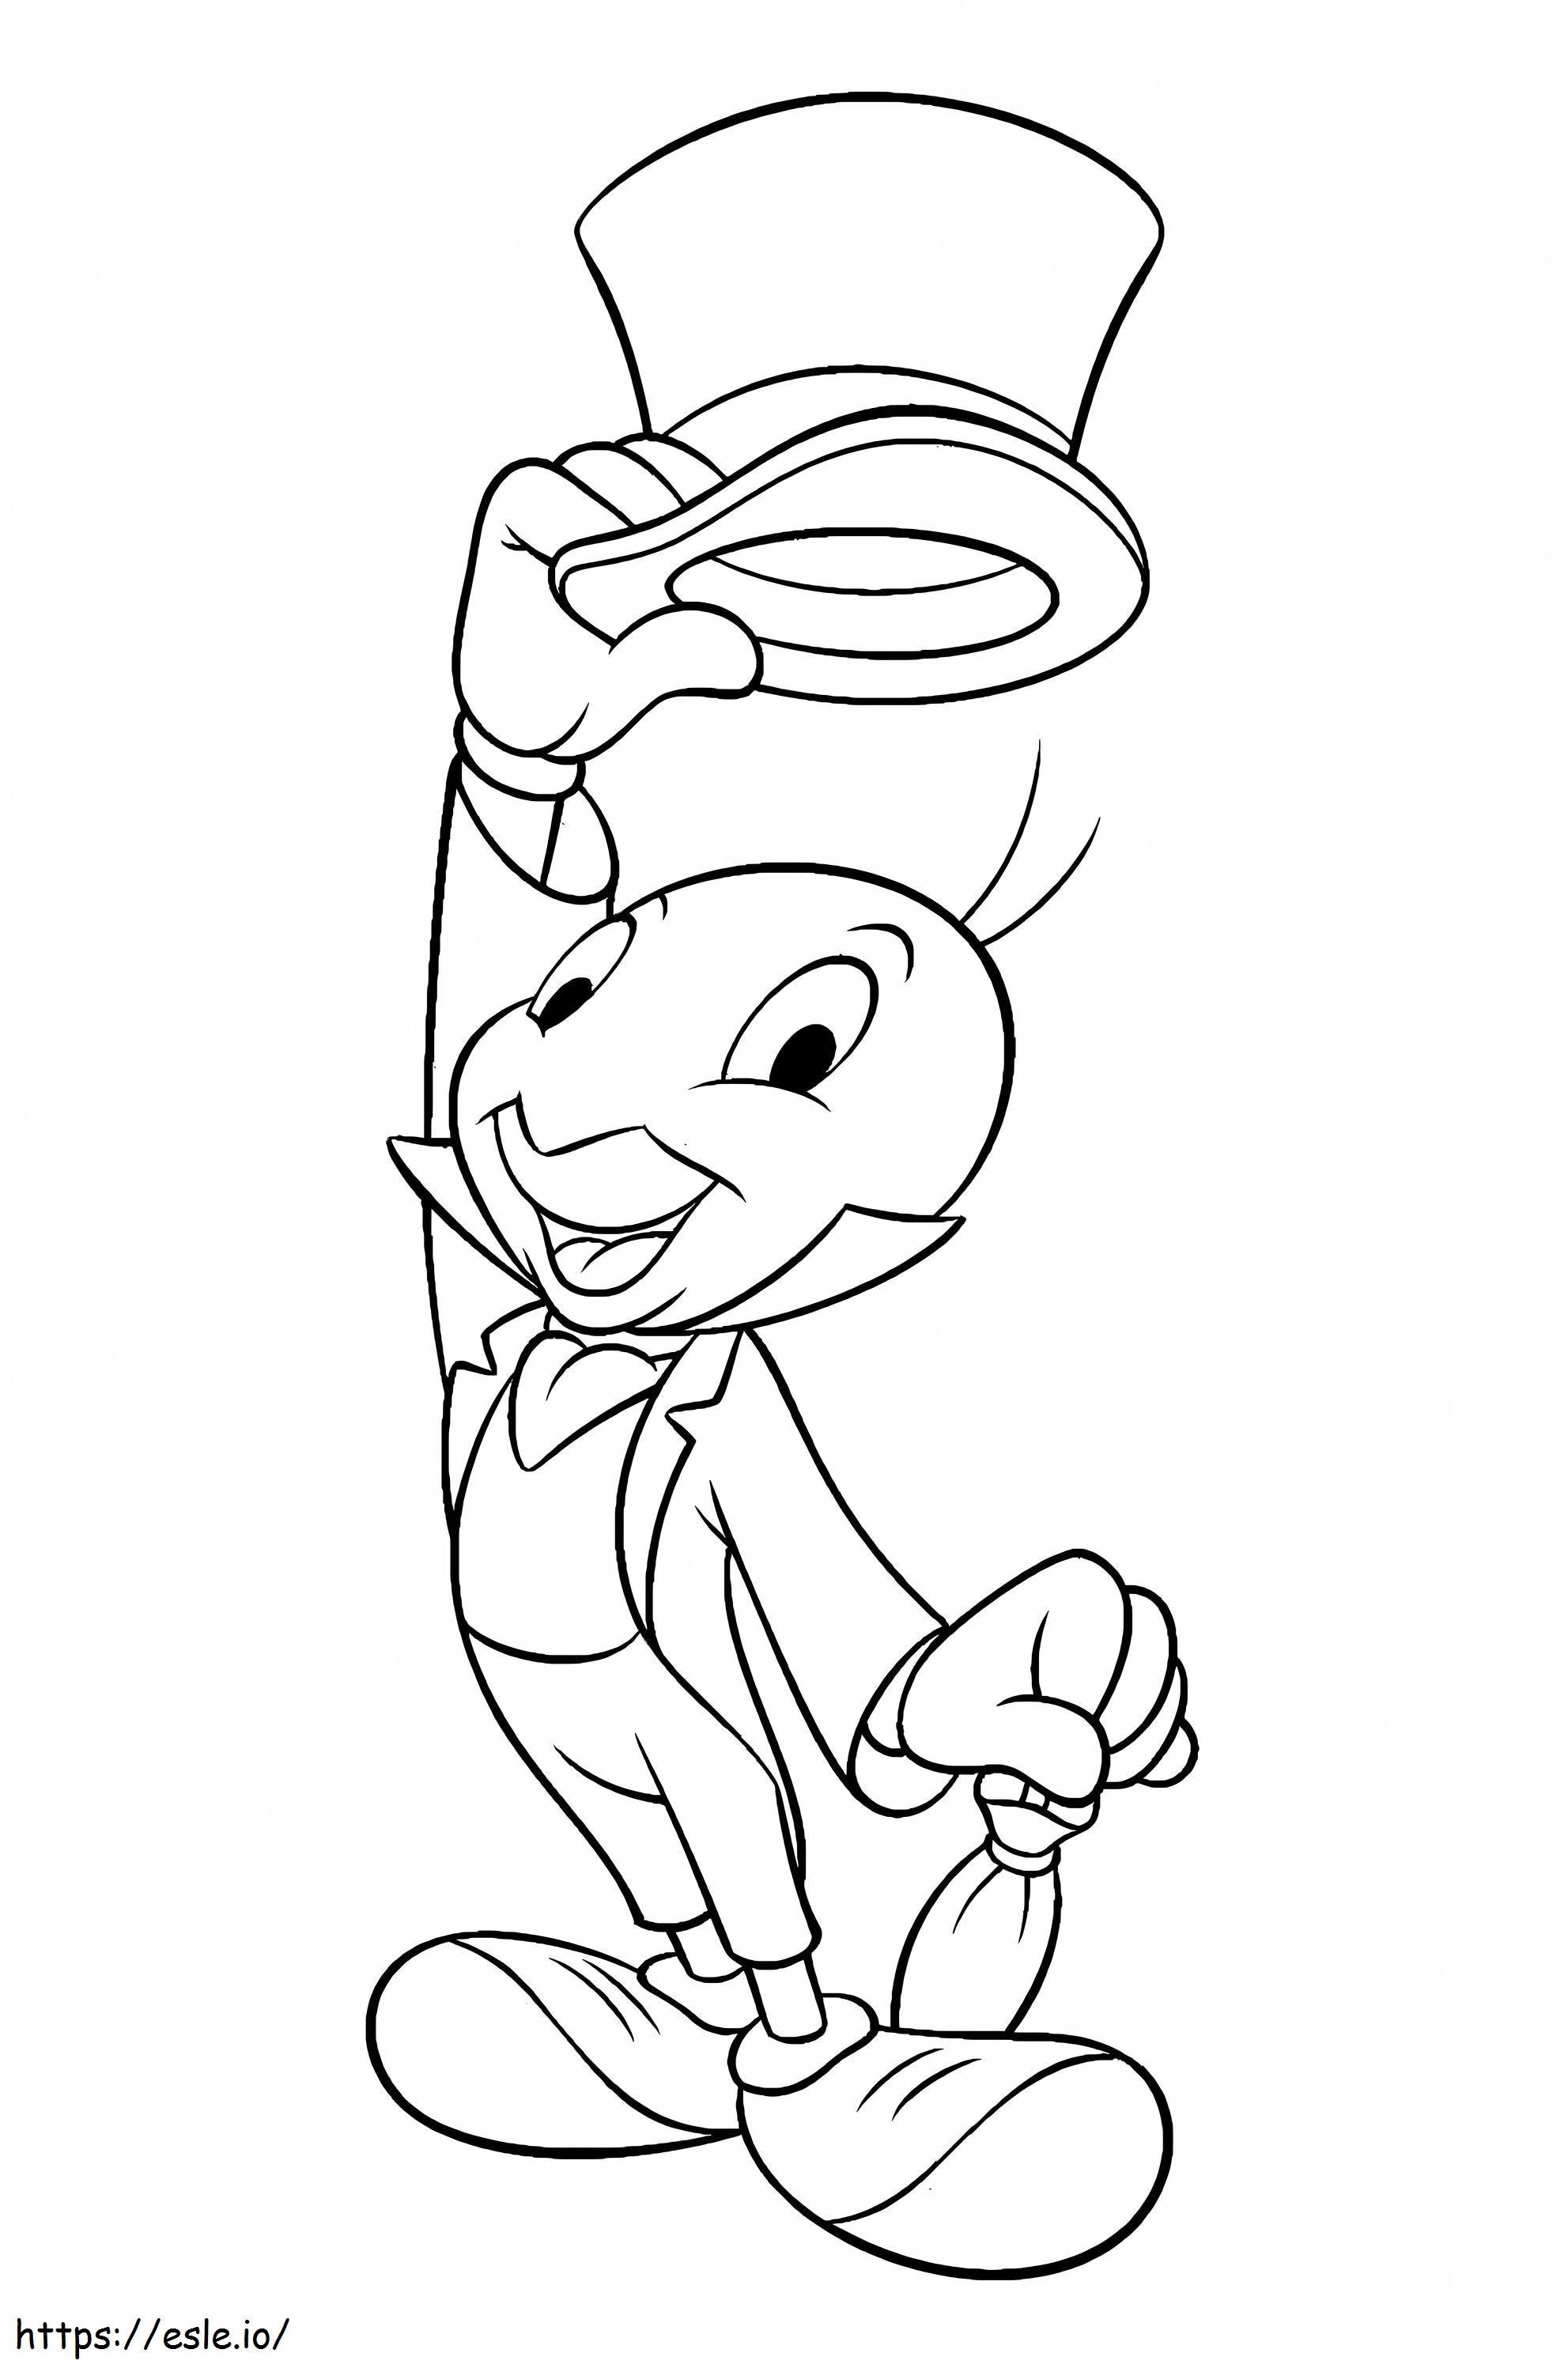 Jiminy Cricket in Pinocchio ausmalbilder